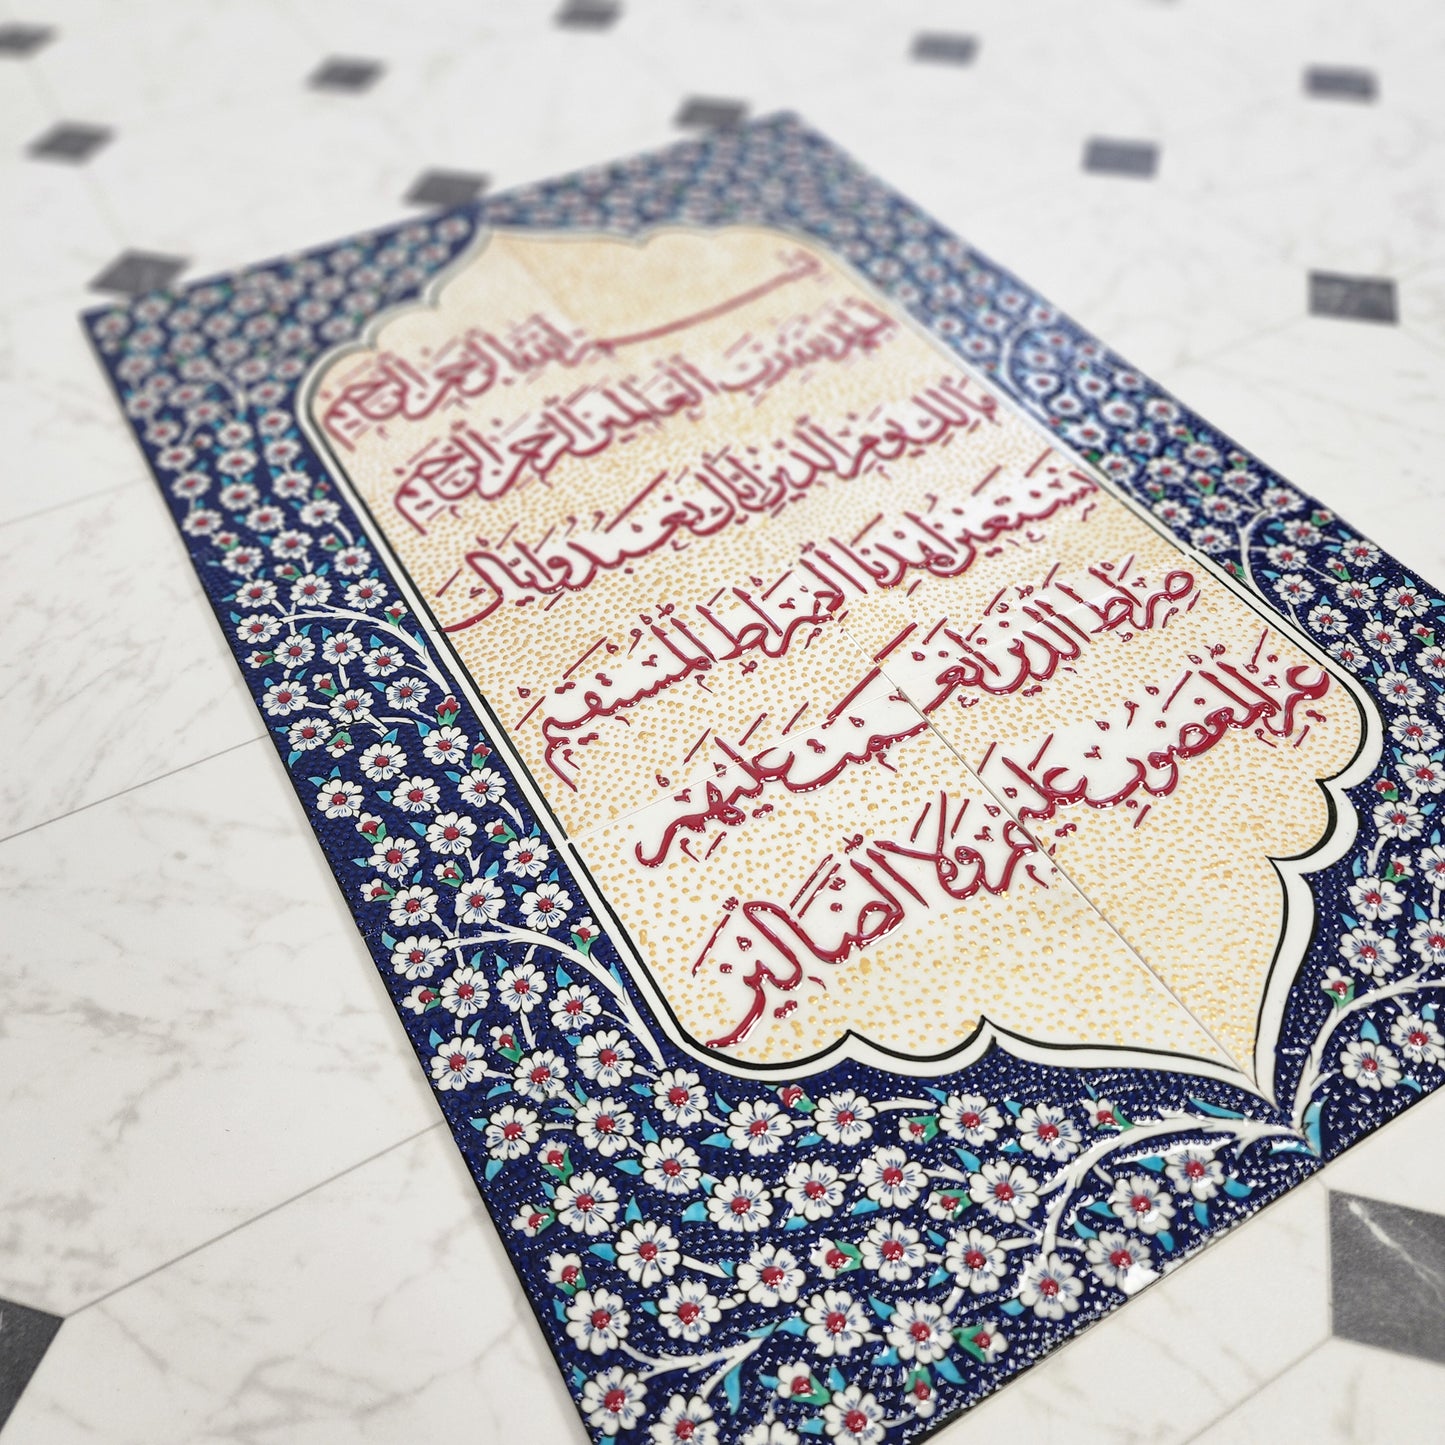 Al-Fatiha - Islamic Art Calligraphy Ceramic Tile